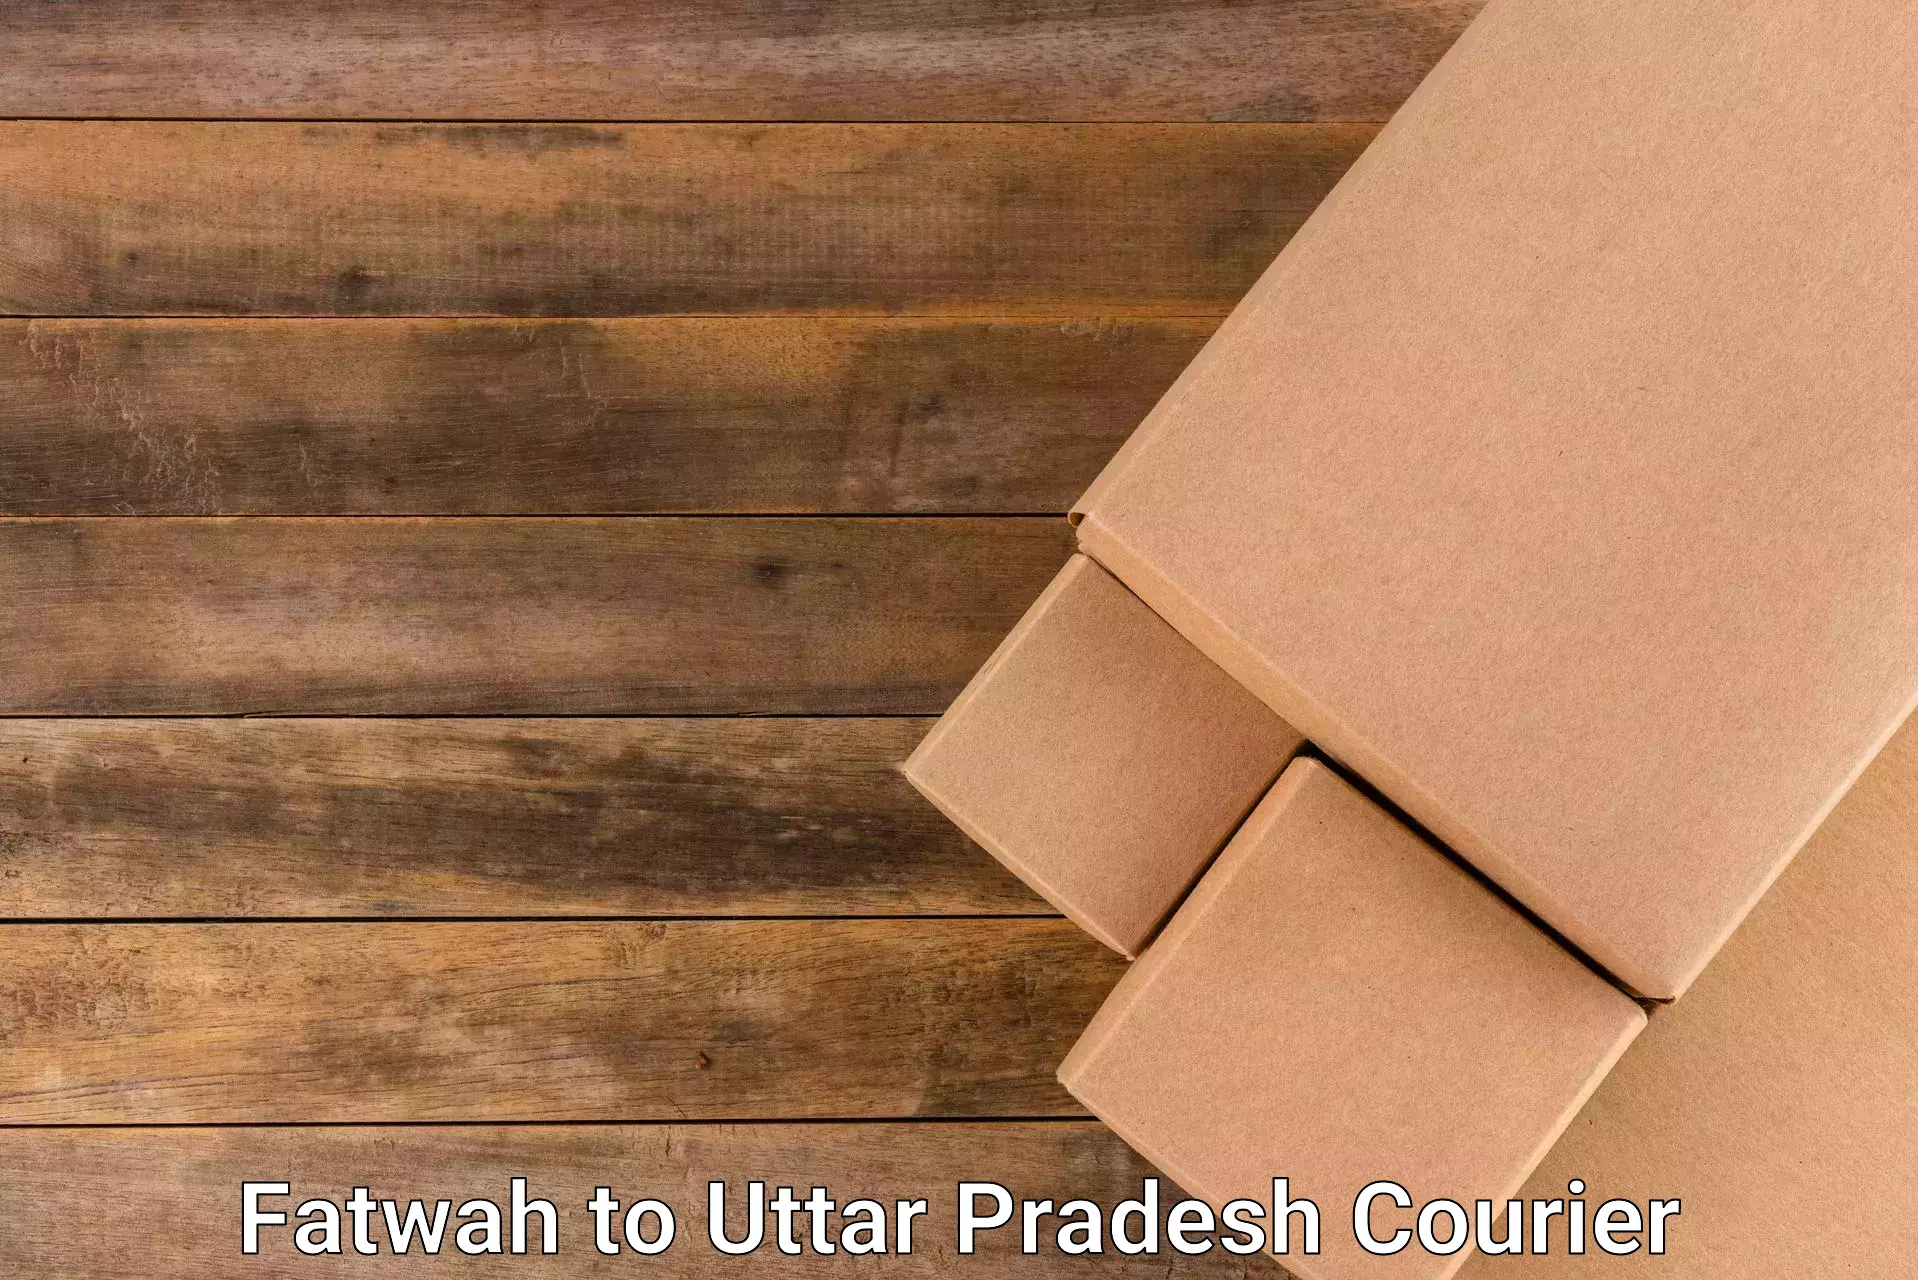 Business shipping needs Fatwah to Uttar Pradesh